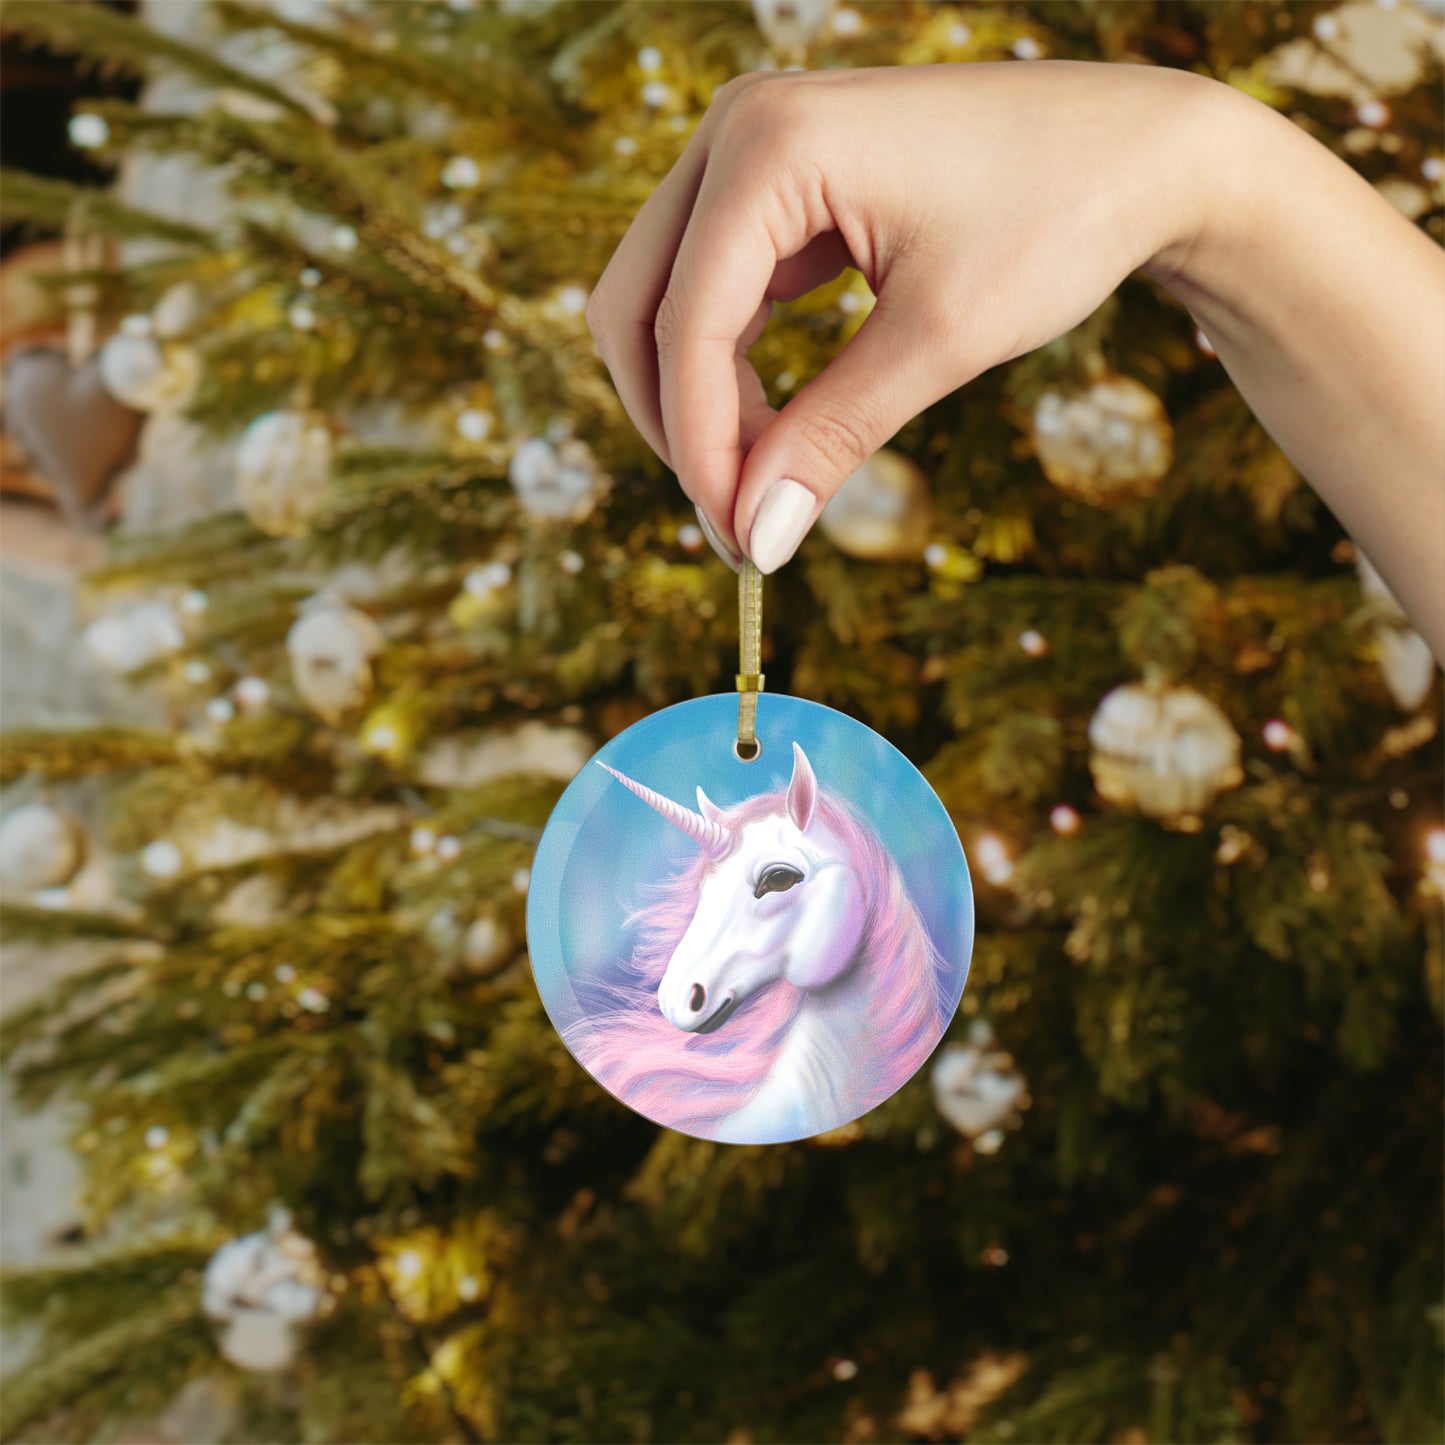 Magical Unicorn Glass Ornaments